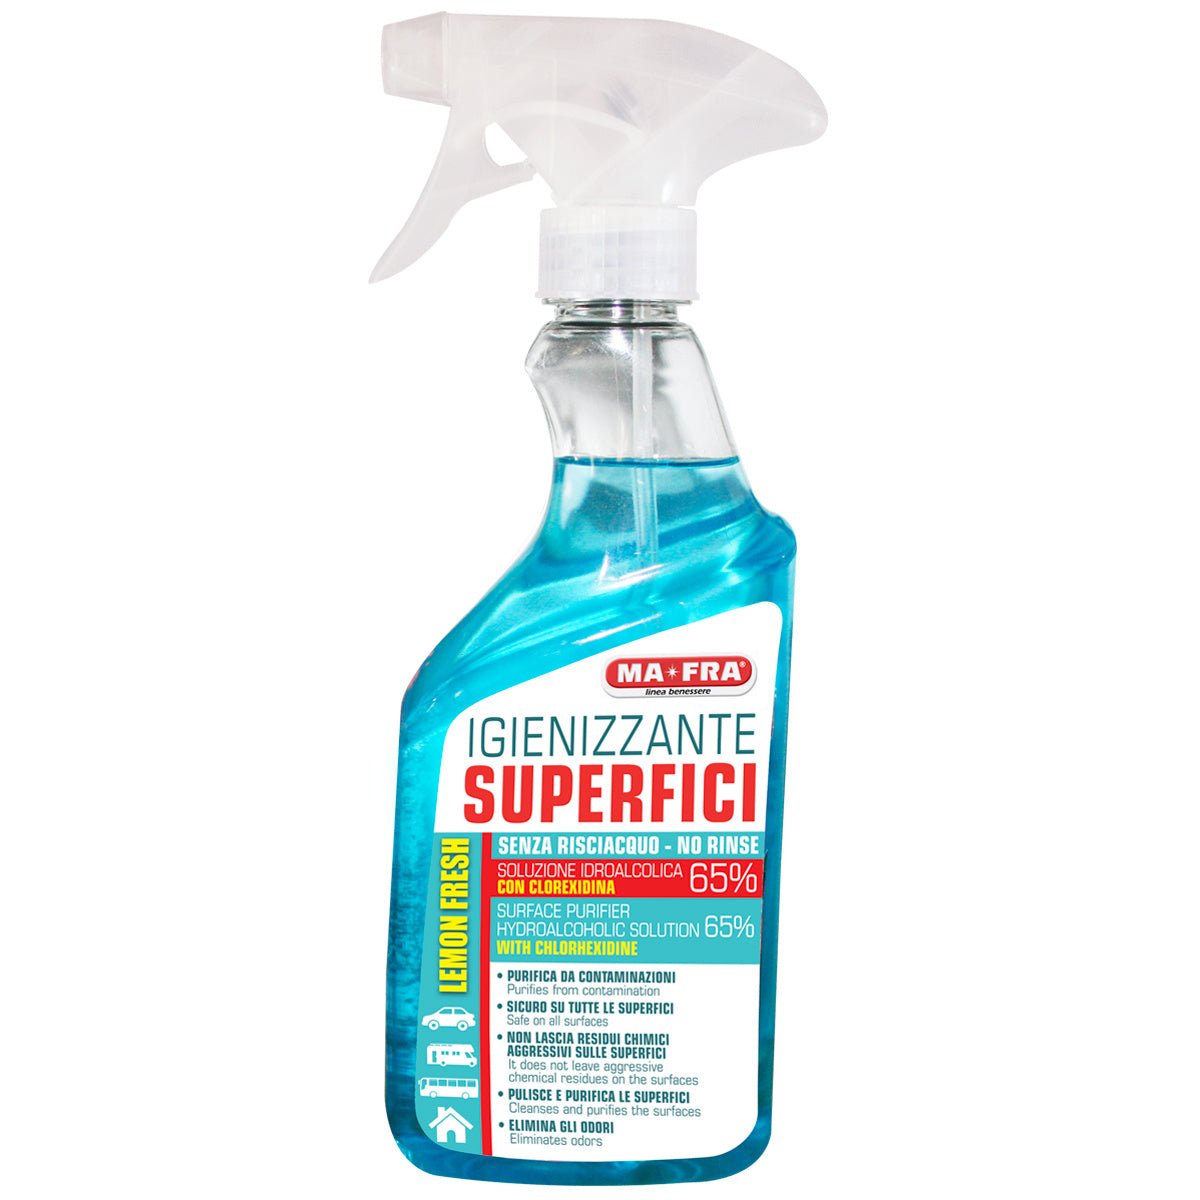 Oberflächen-Desinfektionsmittel - Autopflege kaufenDesinfektionmittelMa-FraH1041